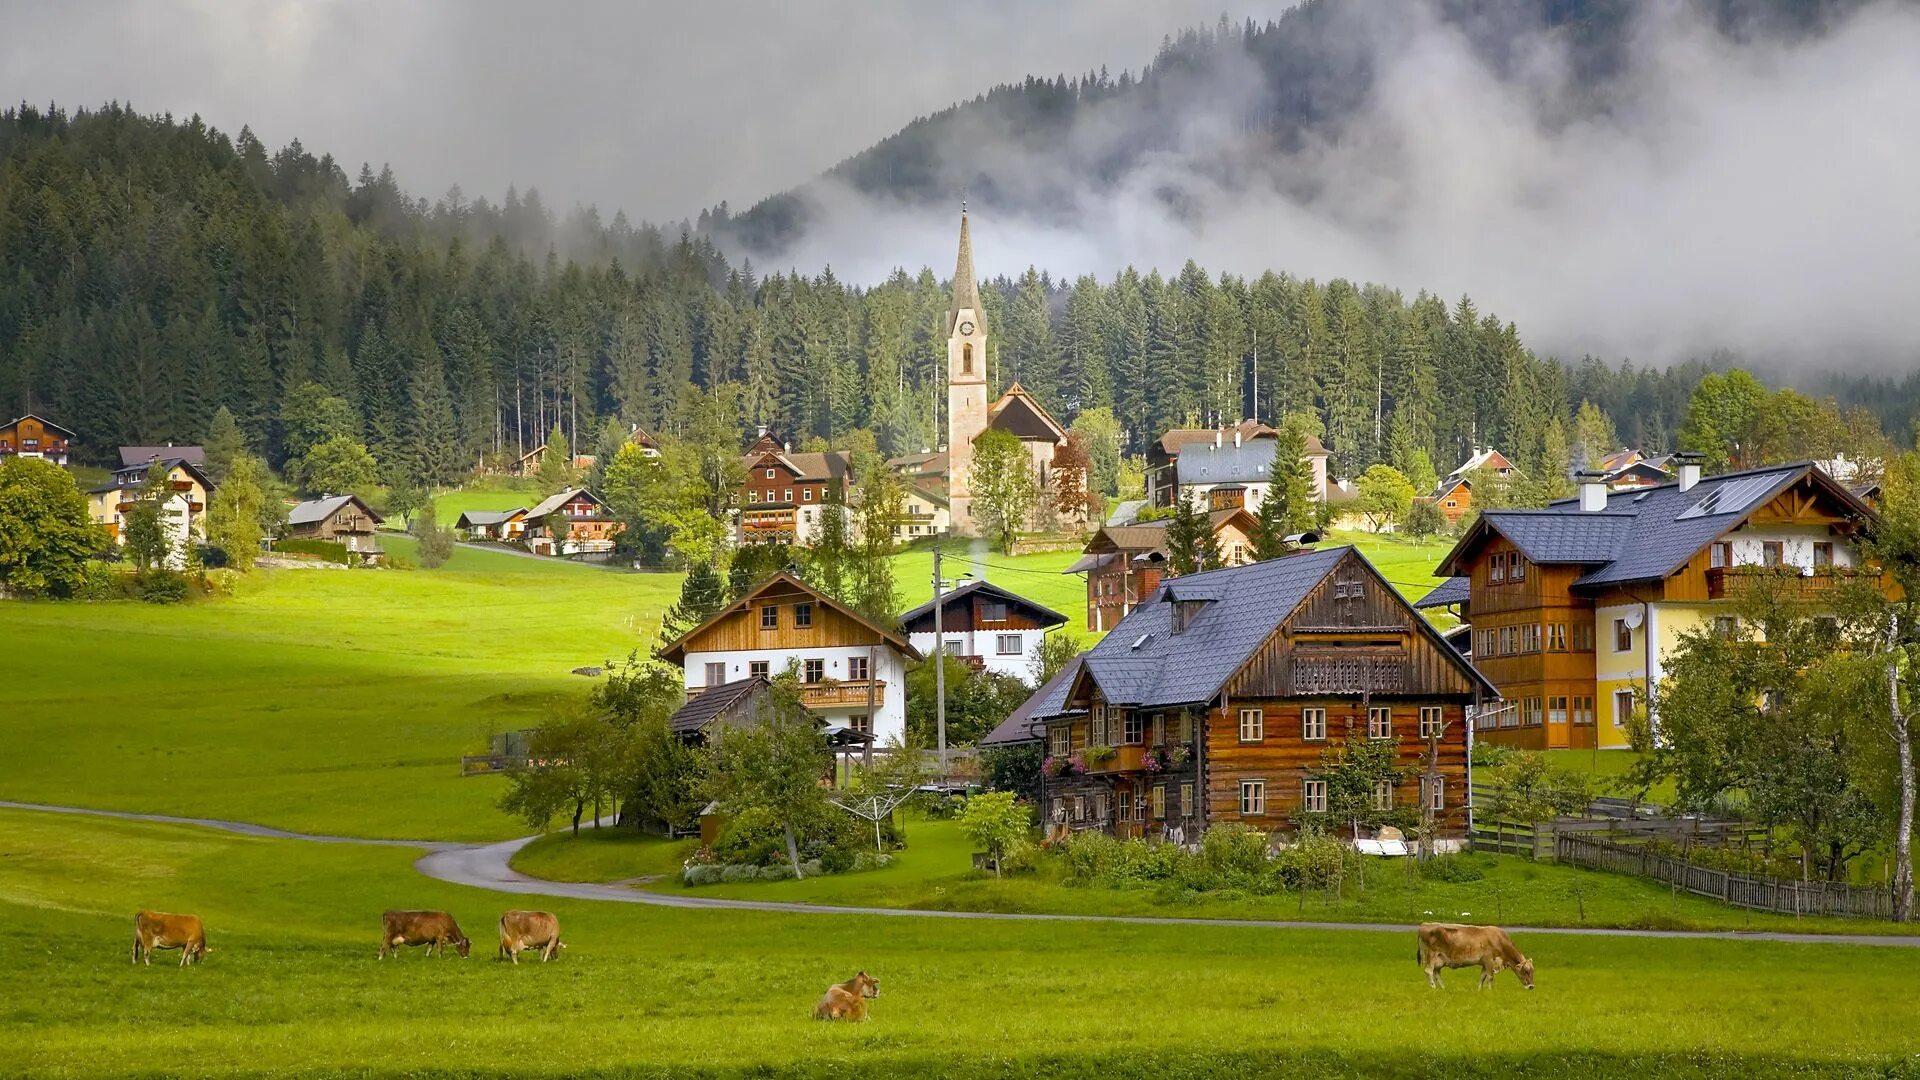 Full village. Альпийские деревни в Австрии. Австрийская Альпийская деревня. Госау Австрия. Австрийская Горная деревня.